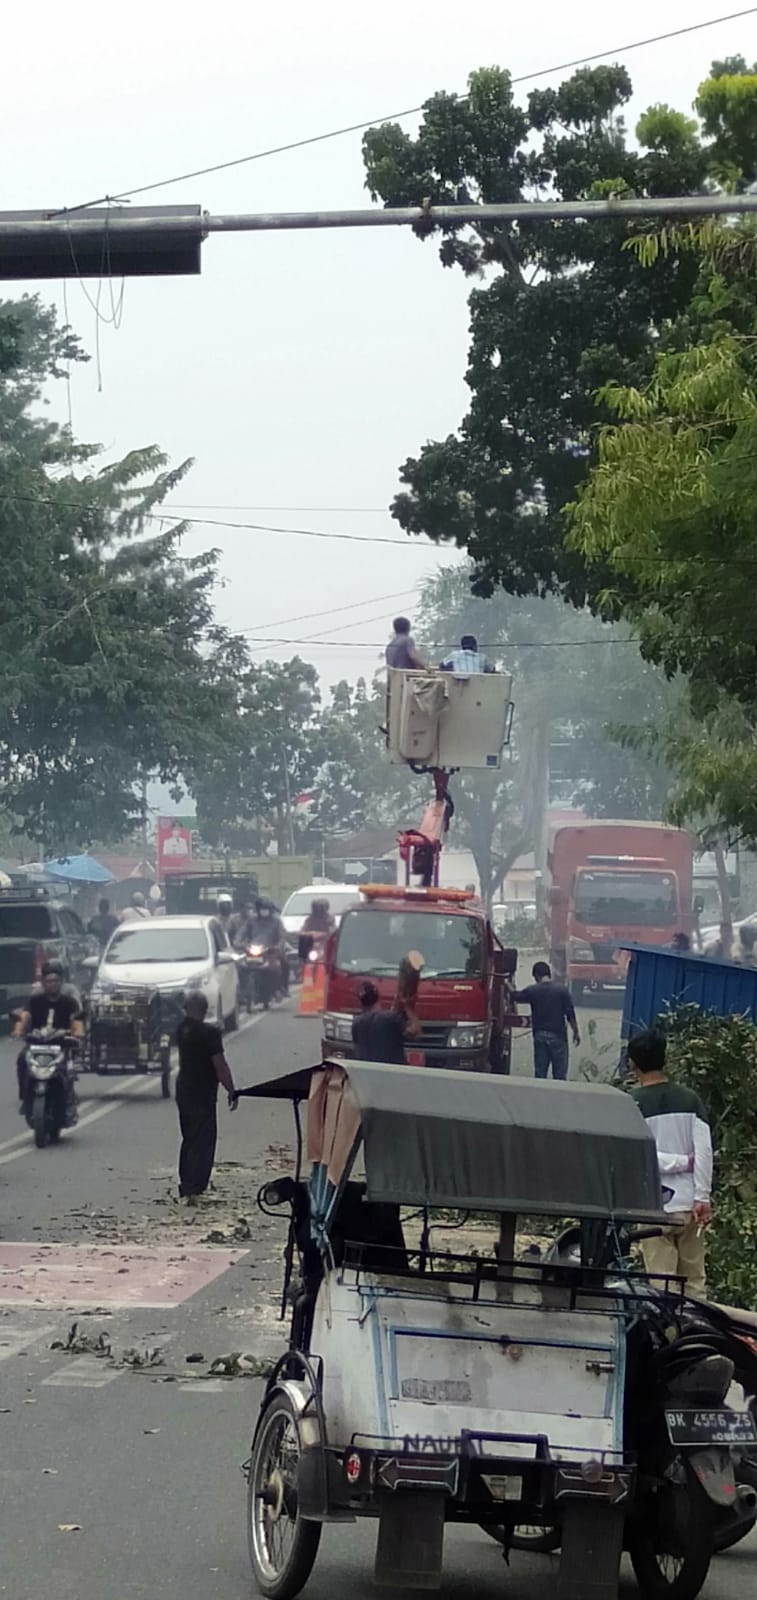 Dishub Labuhanbatu Membersihkan Ranting Pohon di Jalan WR Supratman